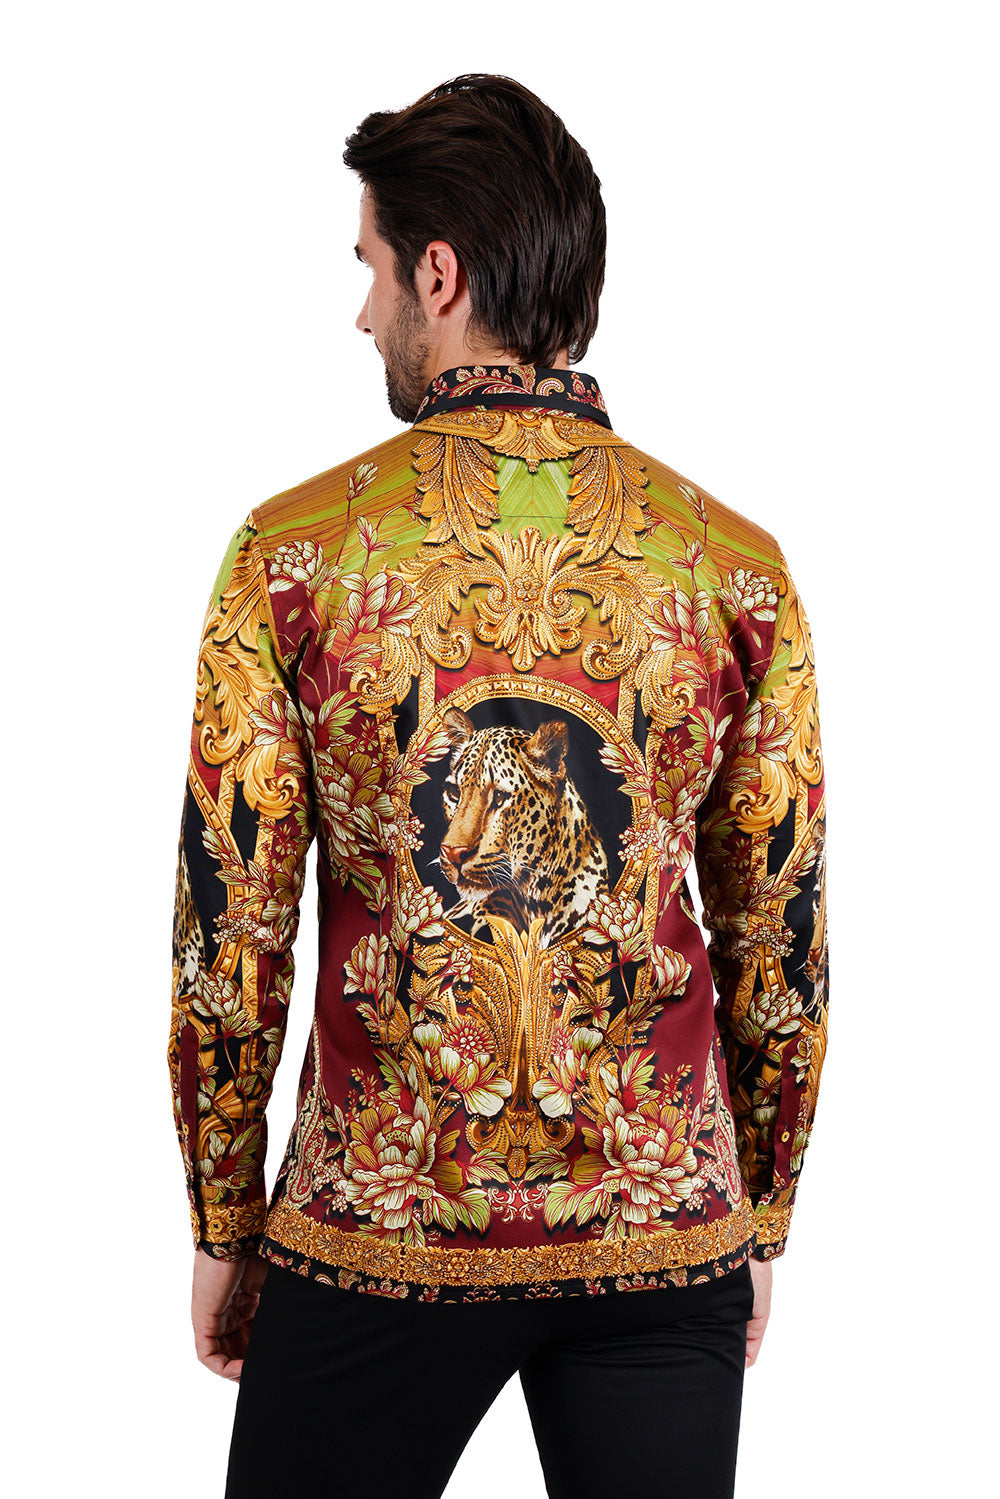 BARABAS Men's Rhinestone Leopard Baroque Long Sleeve Shirts 3SPR414 Plum